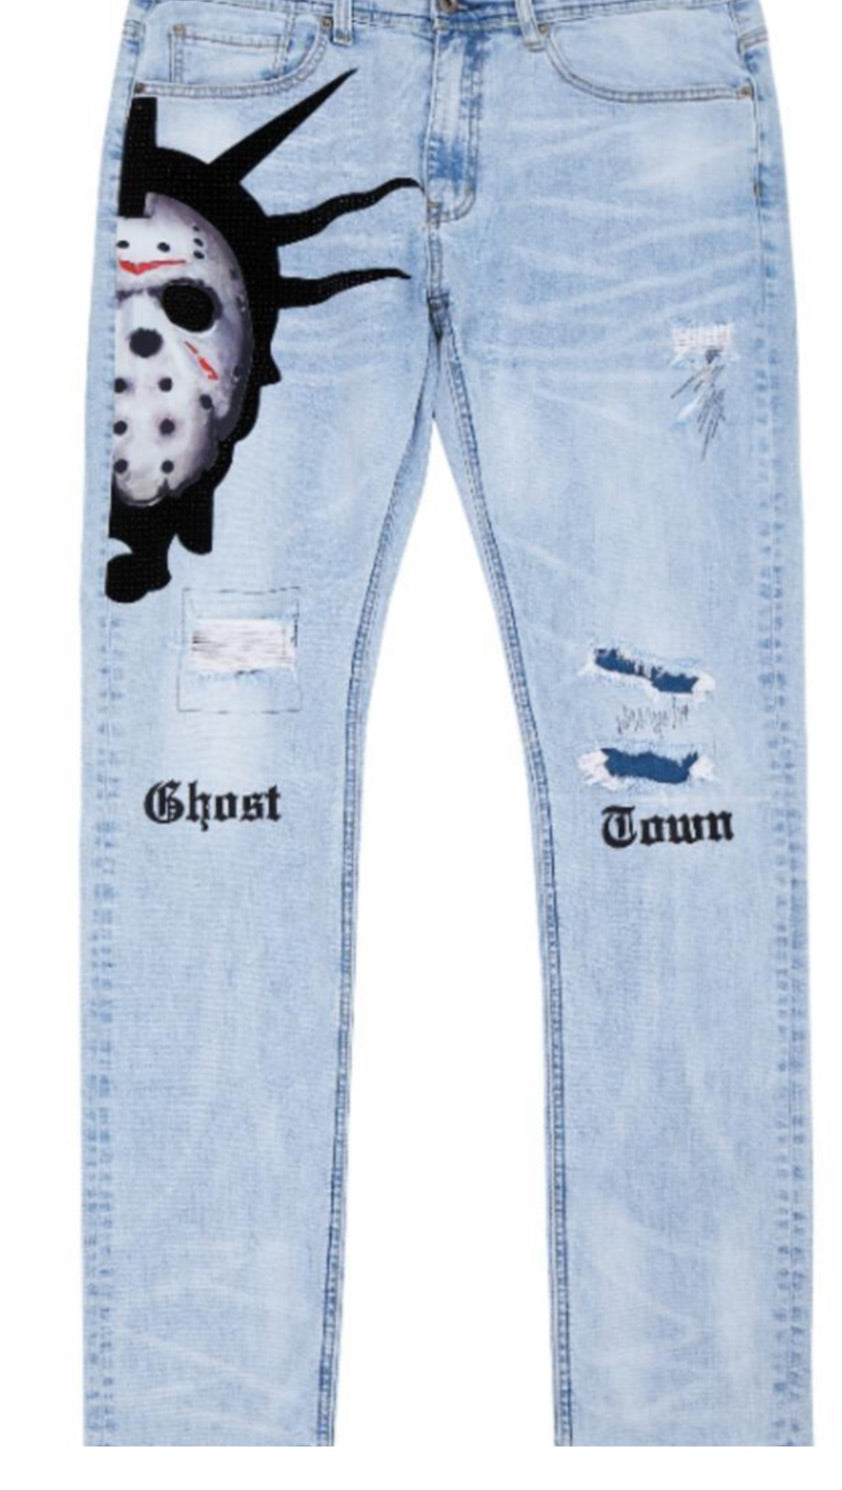 Roku Men’s Rhinestone Denim Jeans Pants